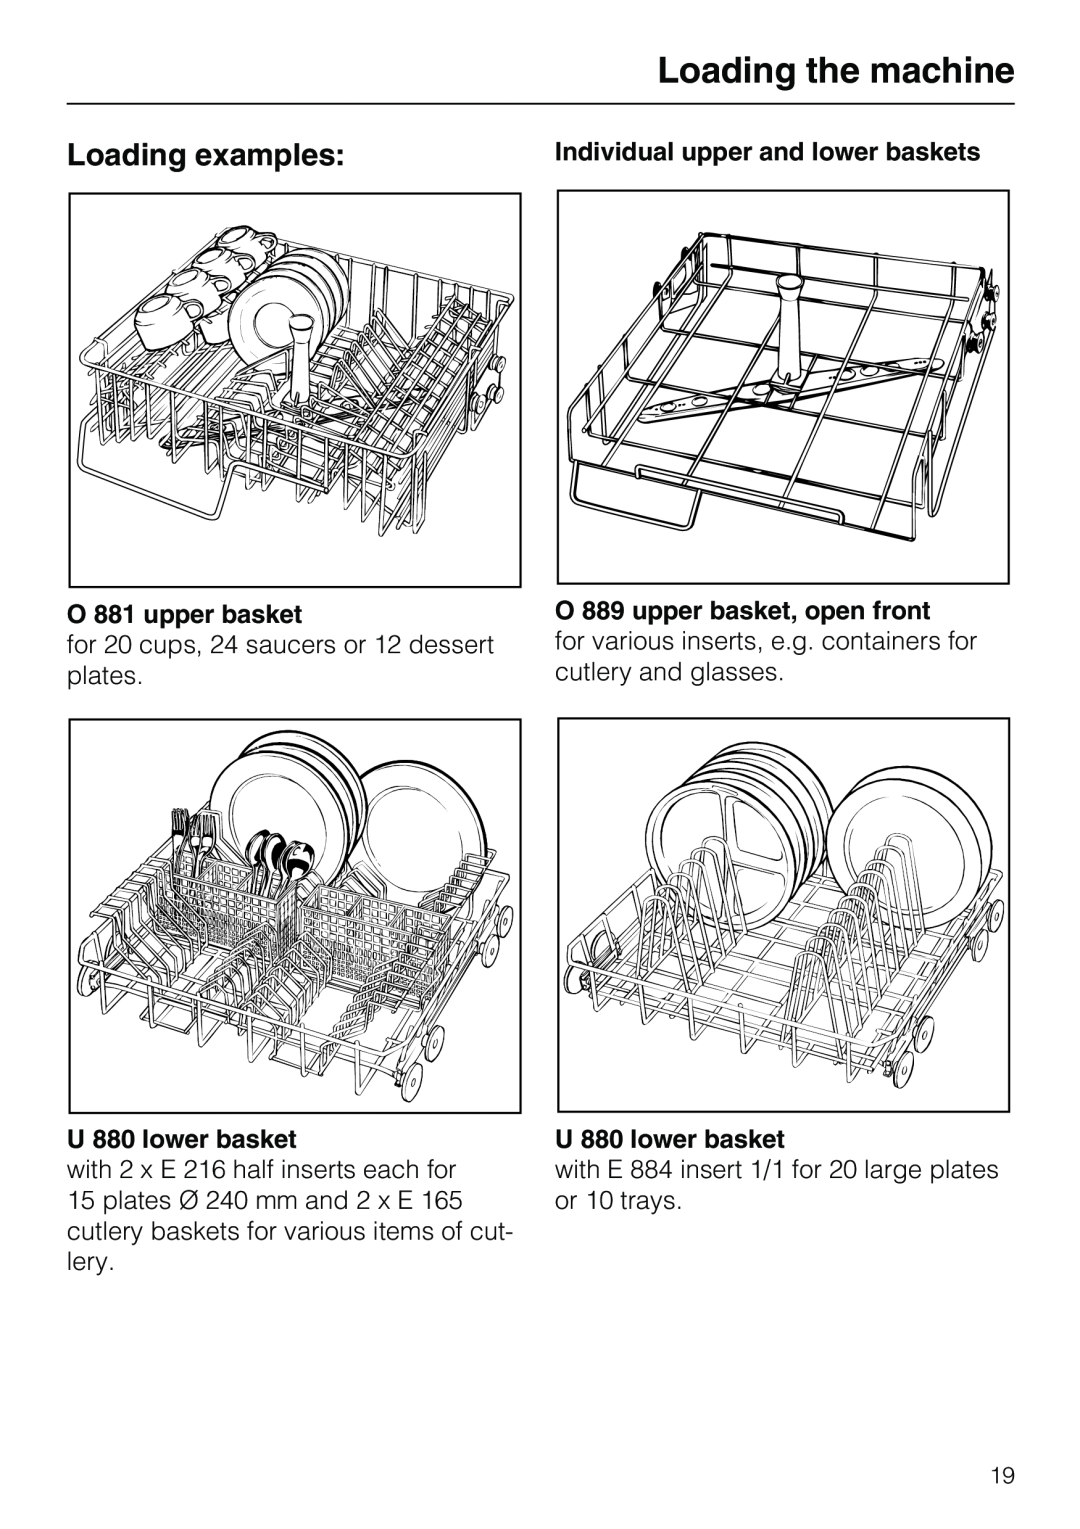 Miele G7859 manual Loading examples, O 881 upper basket, U 880 lower basket, Individual upper and lower baskets 